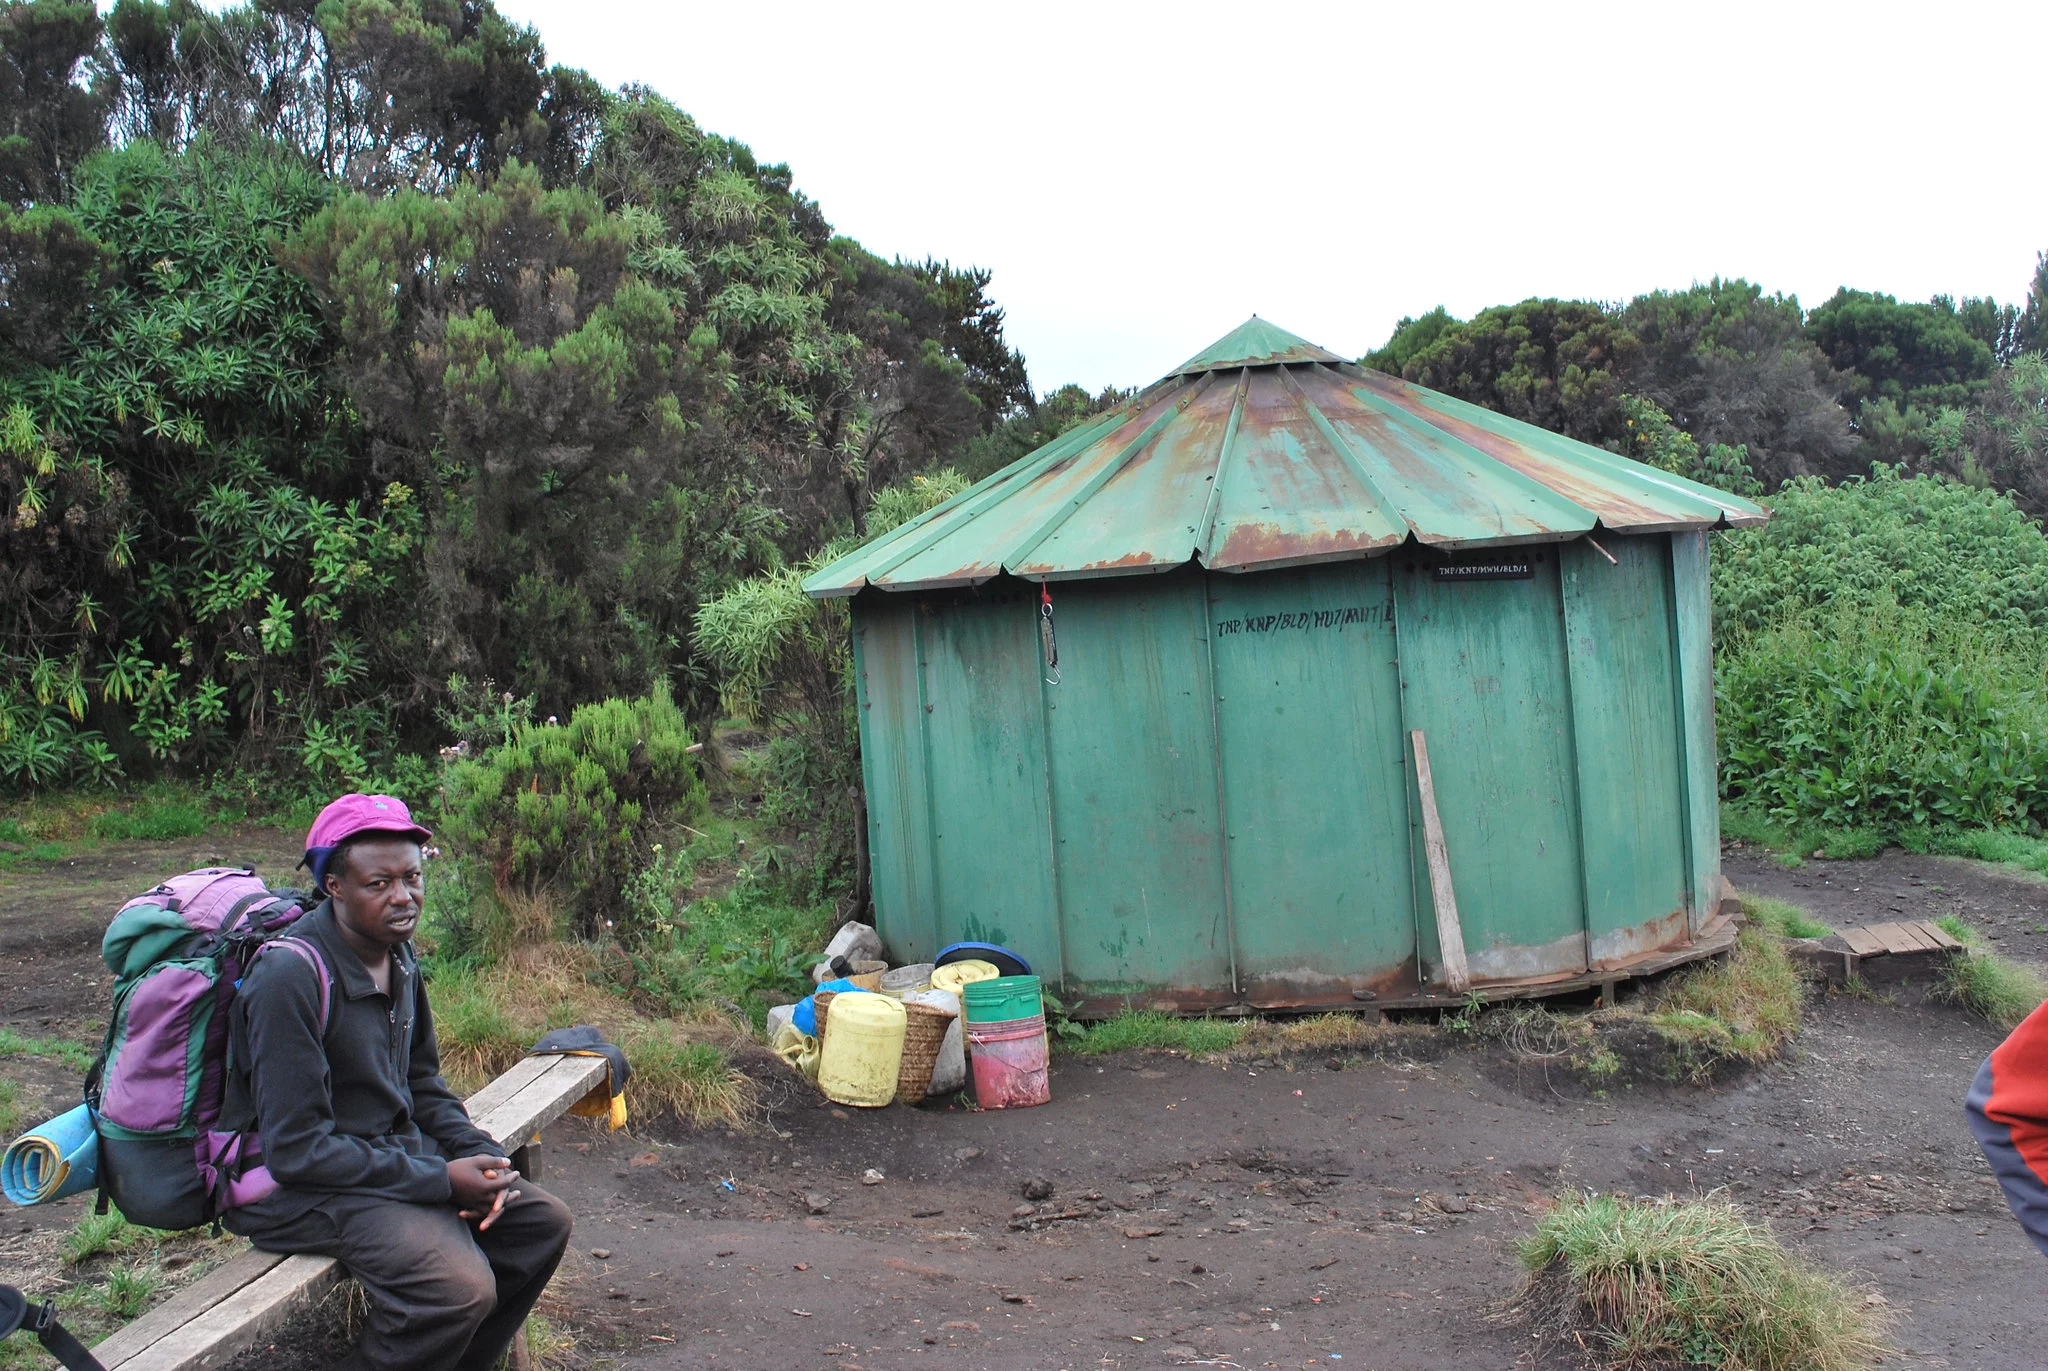 Mweka Camp